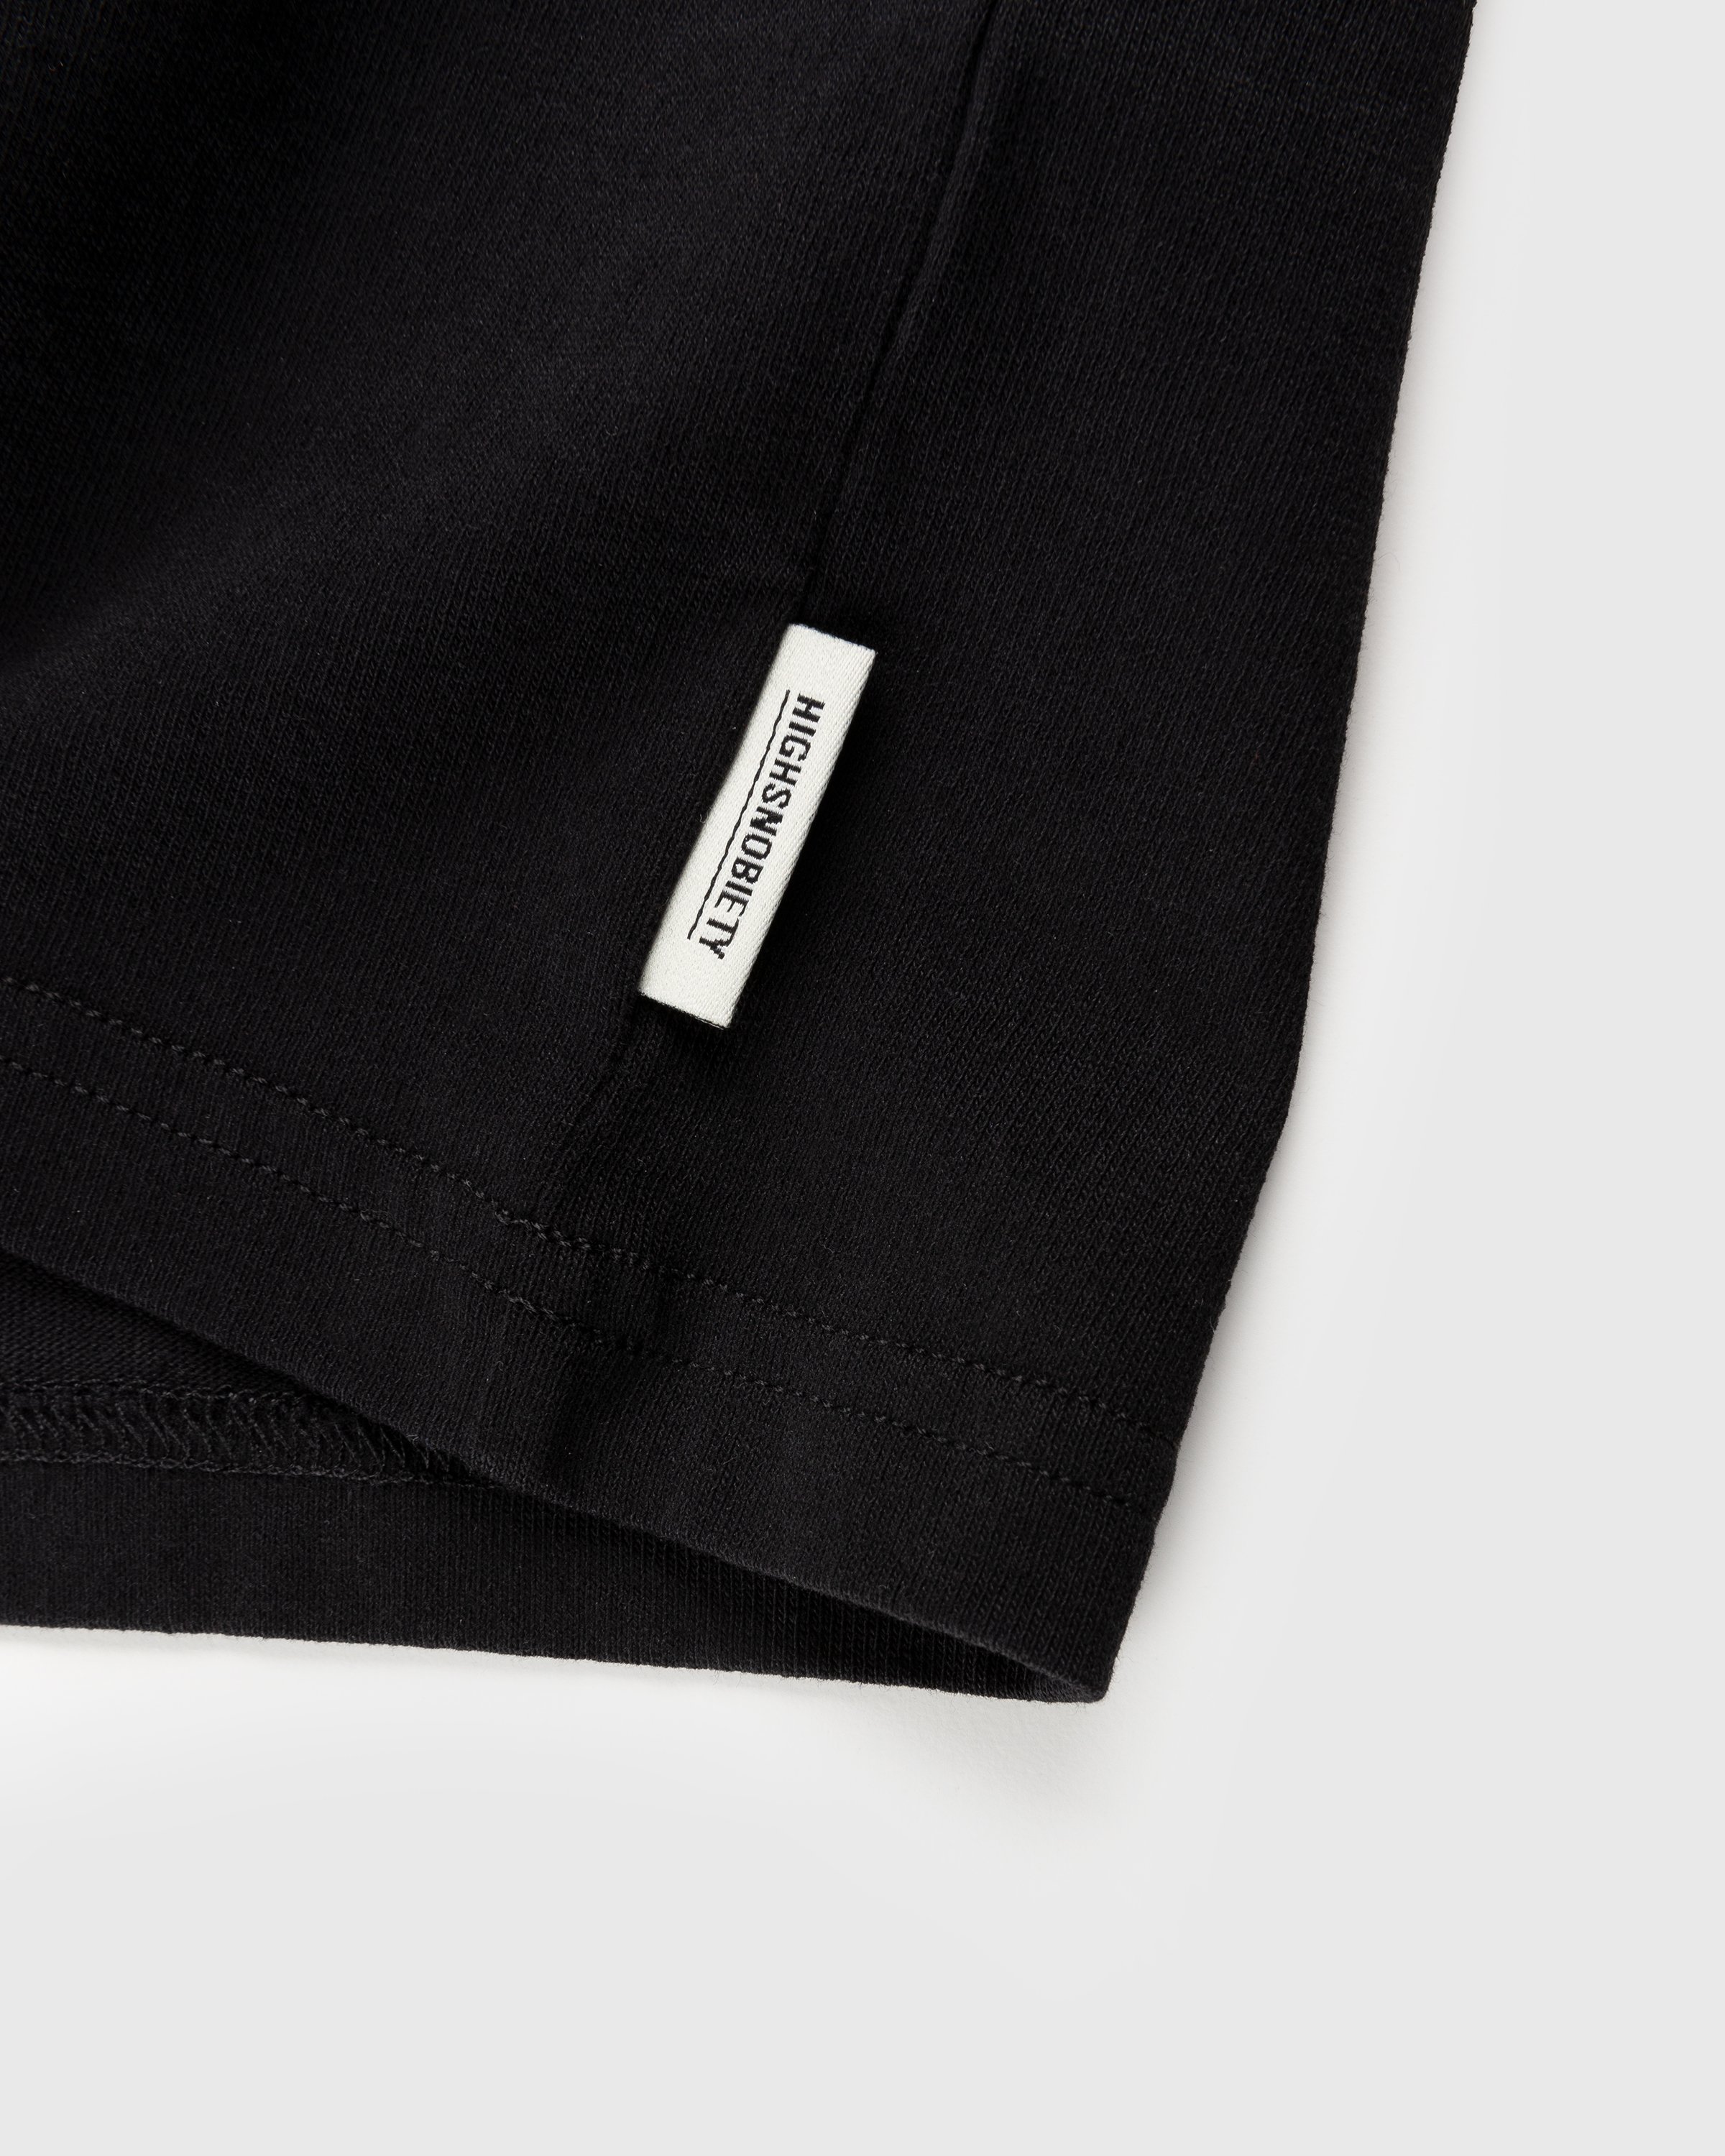 RUF x Highsnobiety - CTR T-Shirt Black - Clothing - Black - Image 3